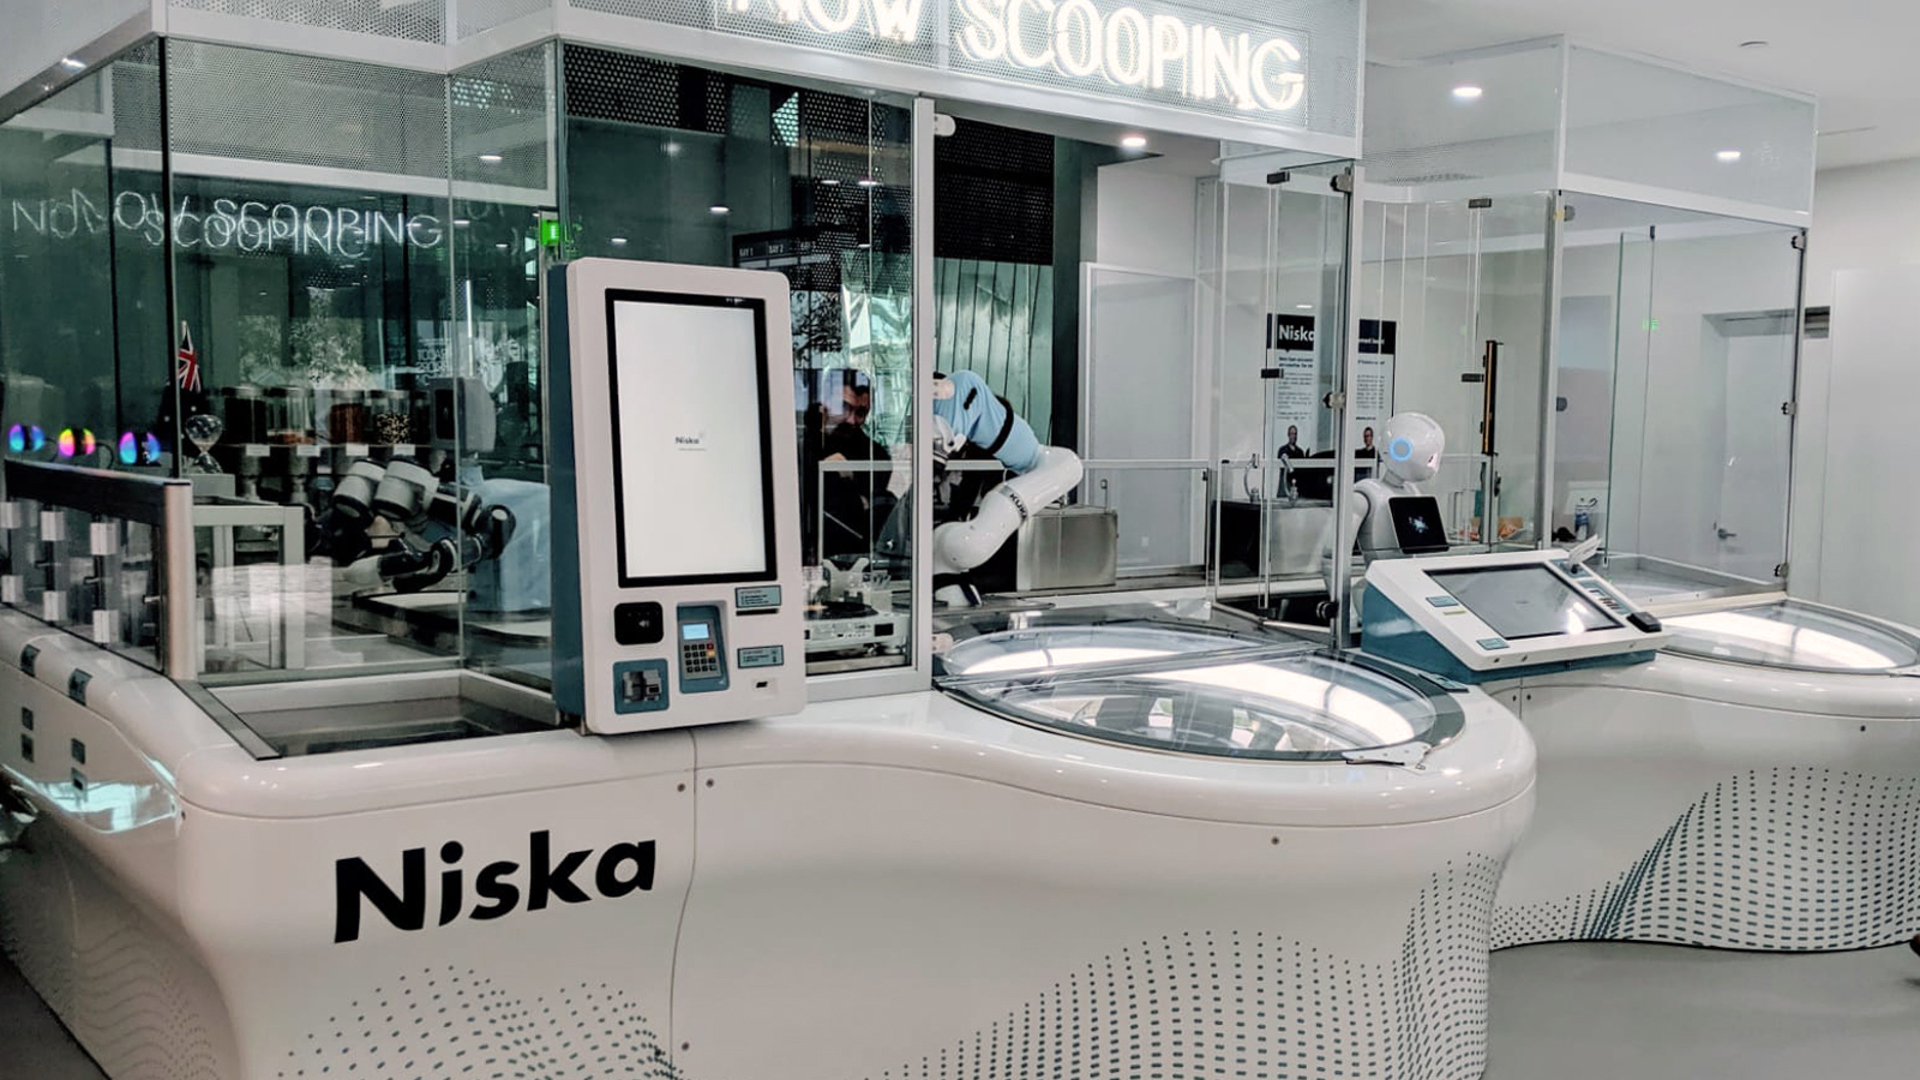 Niska Ice Cream Robotic Kiosk